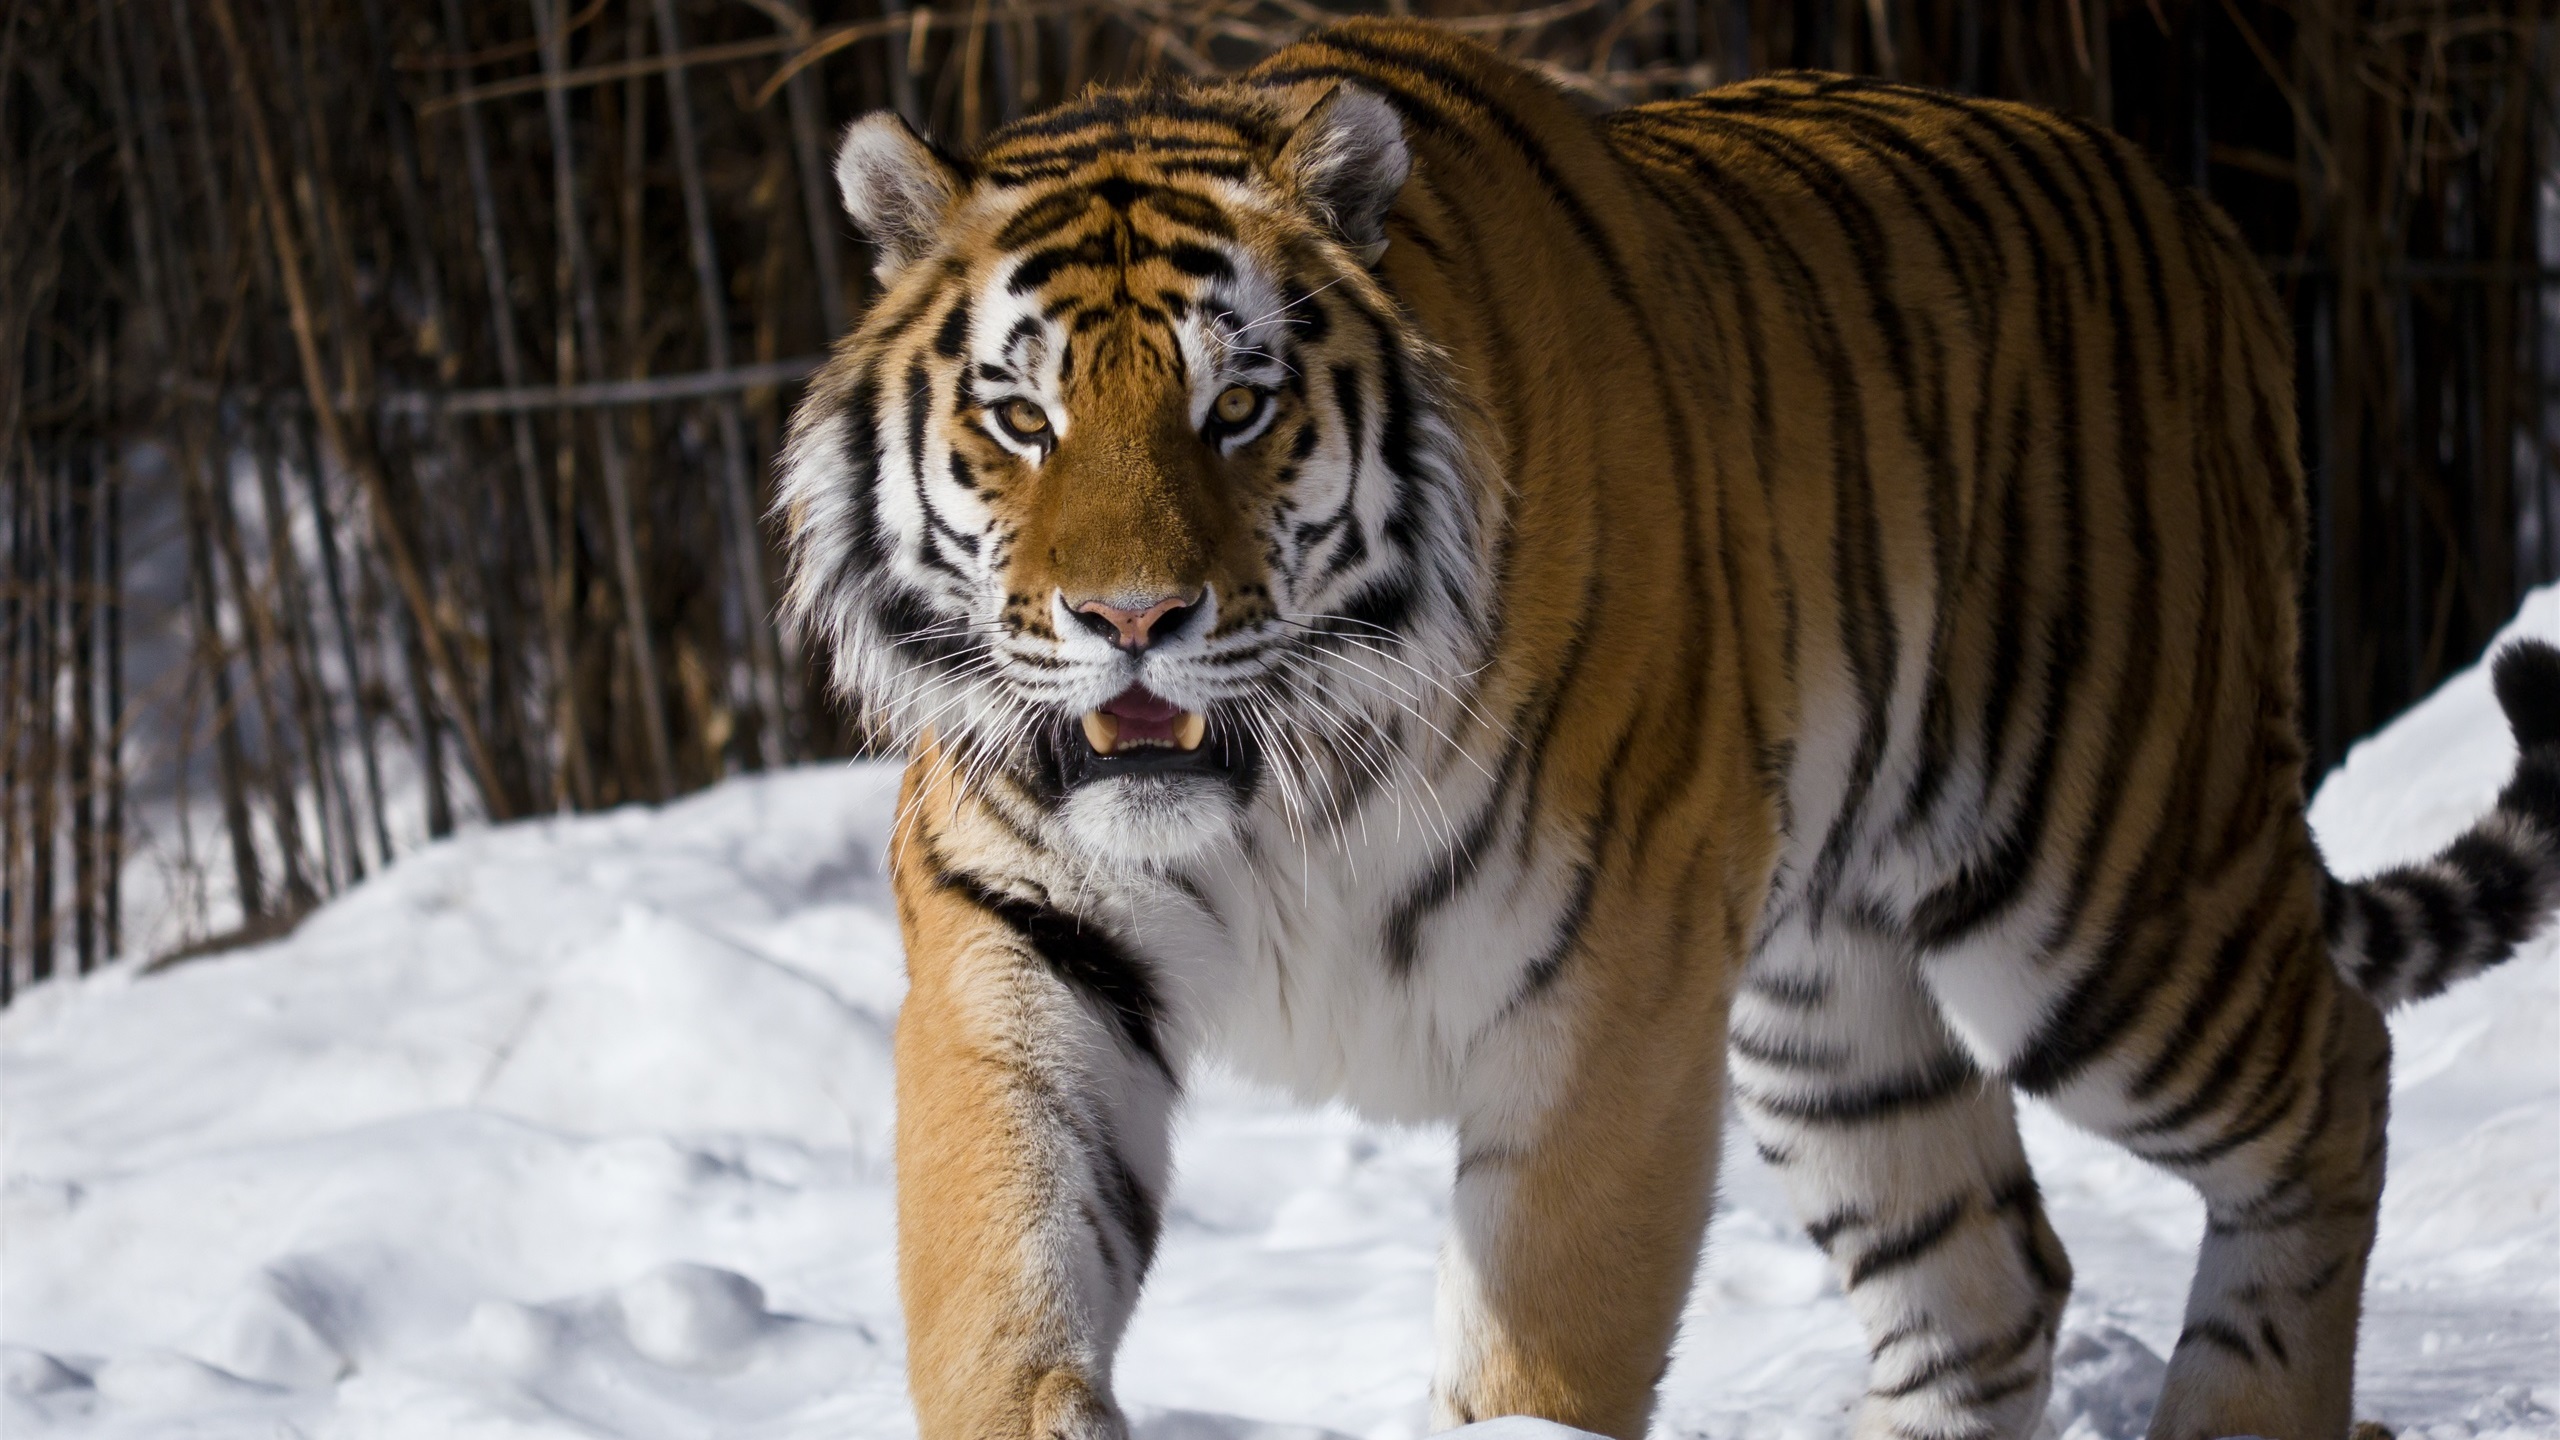 General 2560x1440 tiger snow animals nature winter